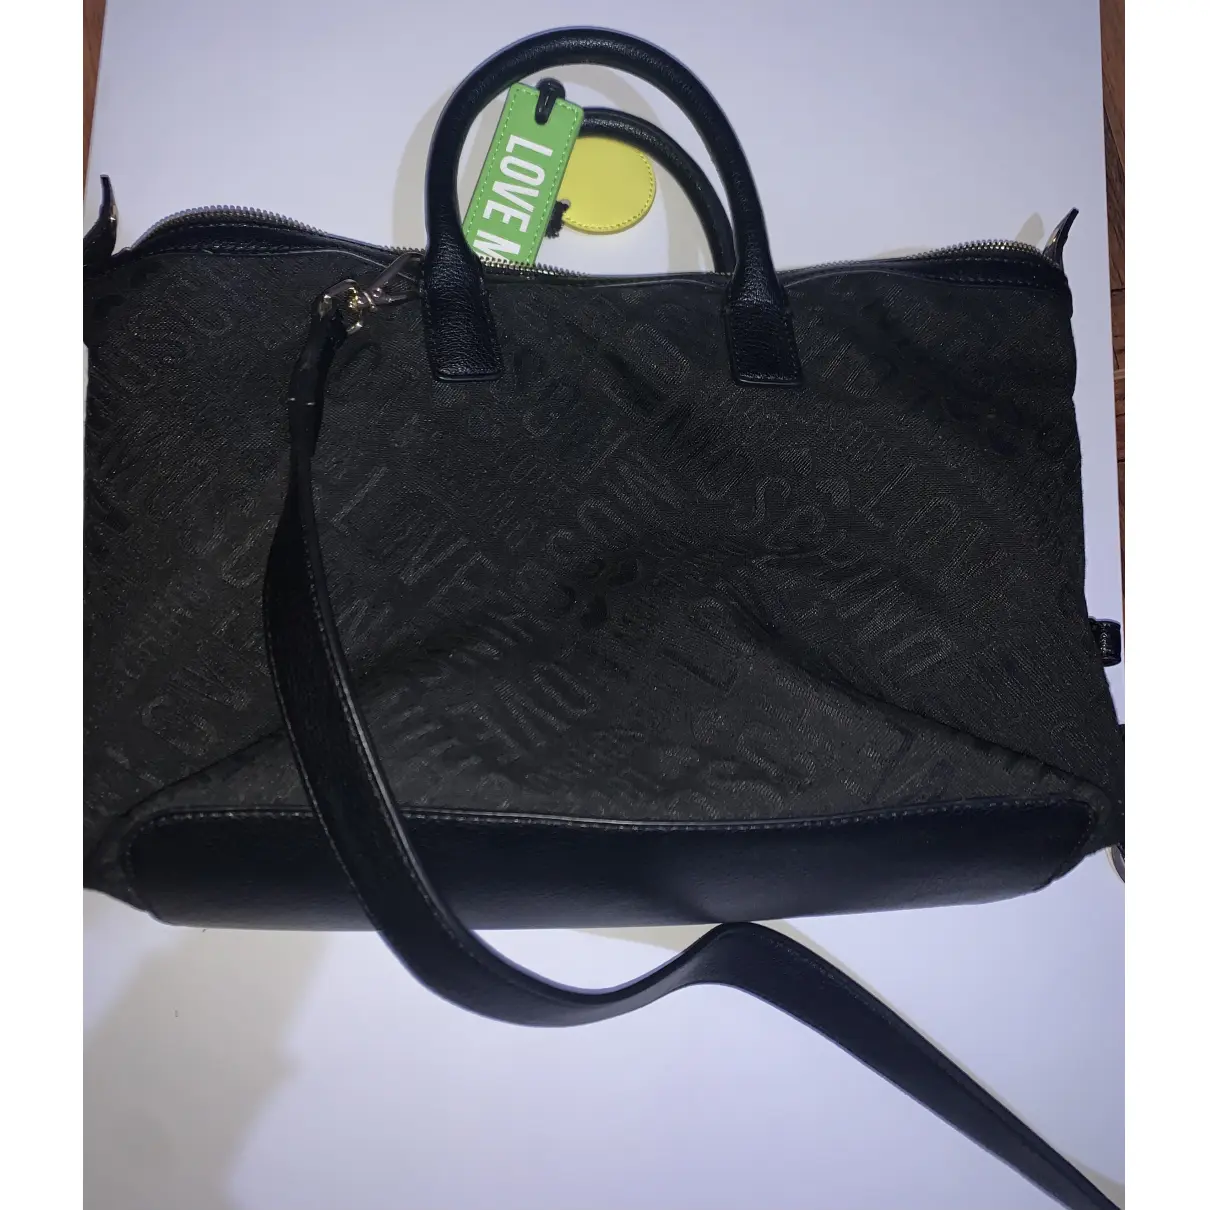 Buy Moschino Love Handbag online